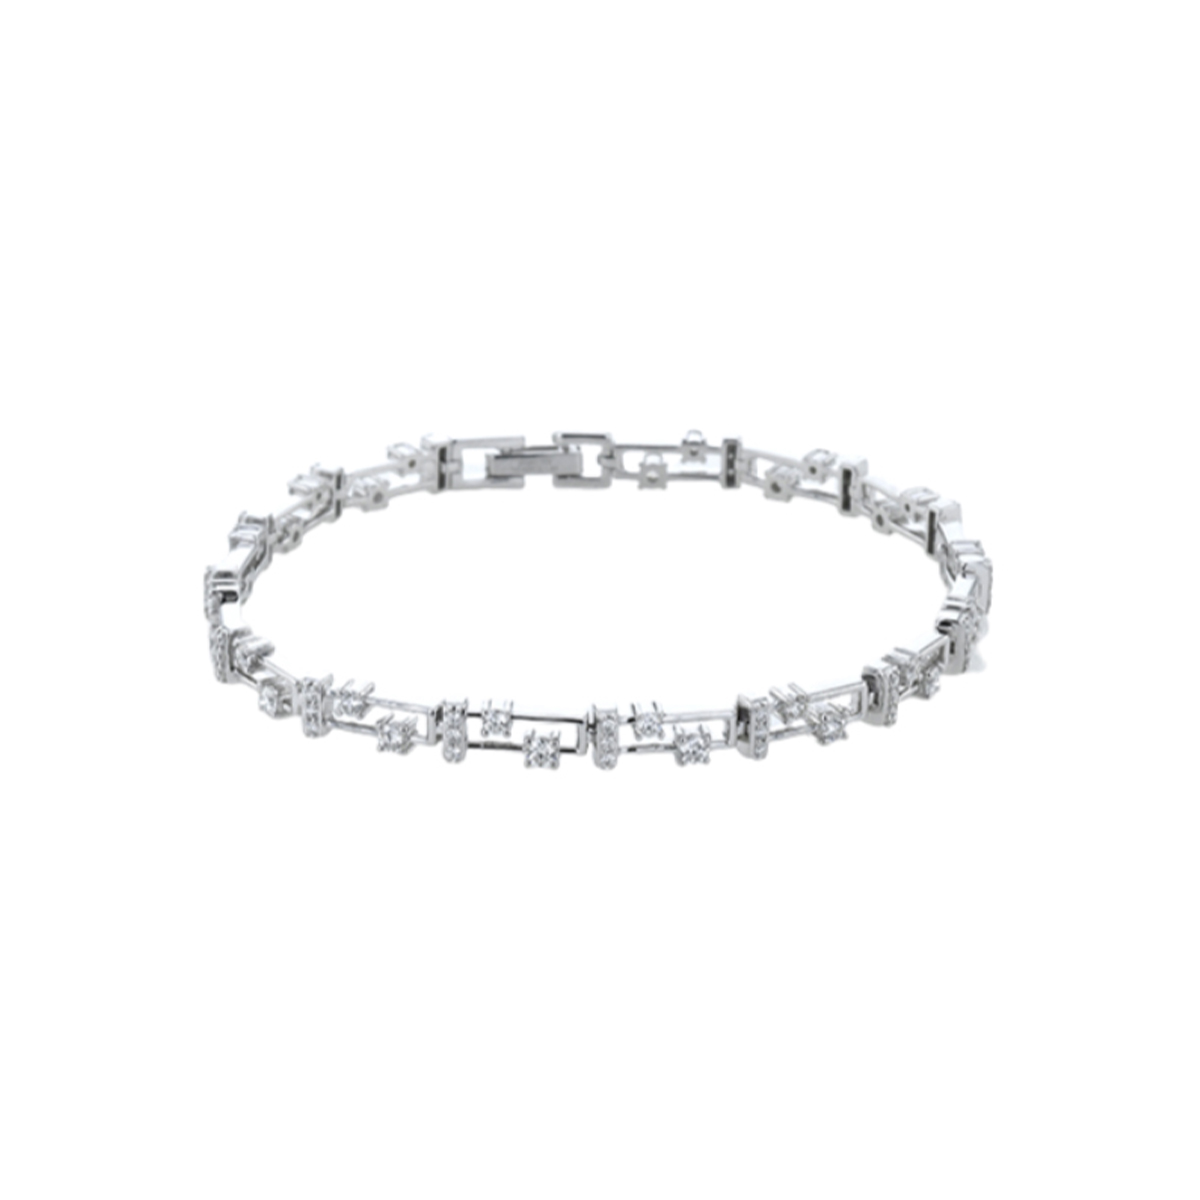 18K White Gold Diamond Square and Rectangle Link Bracelet